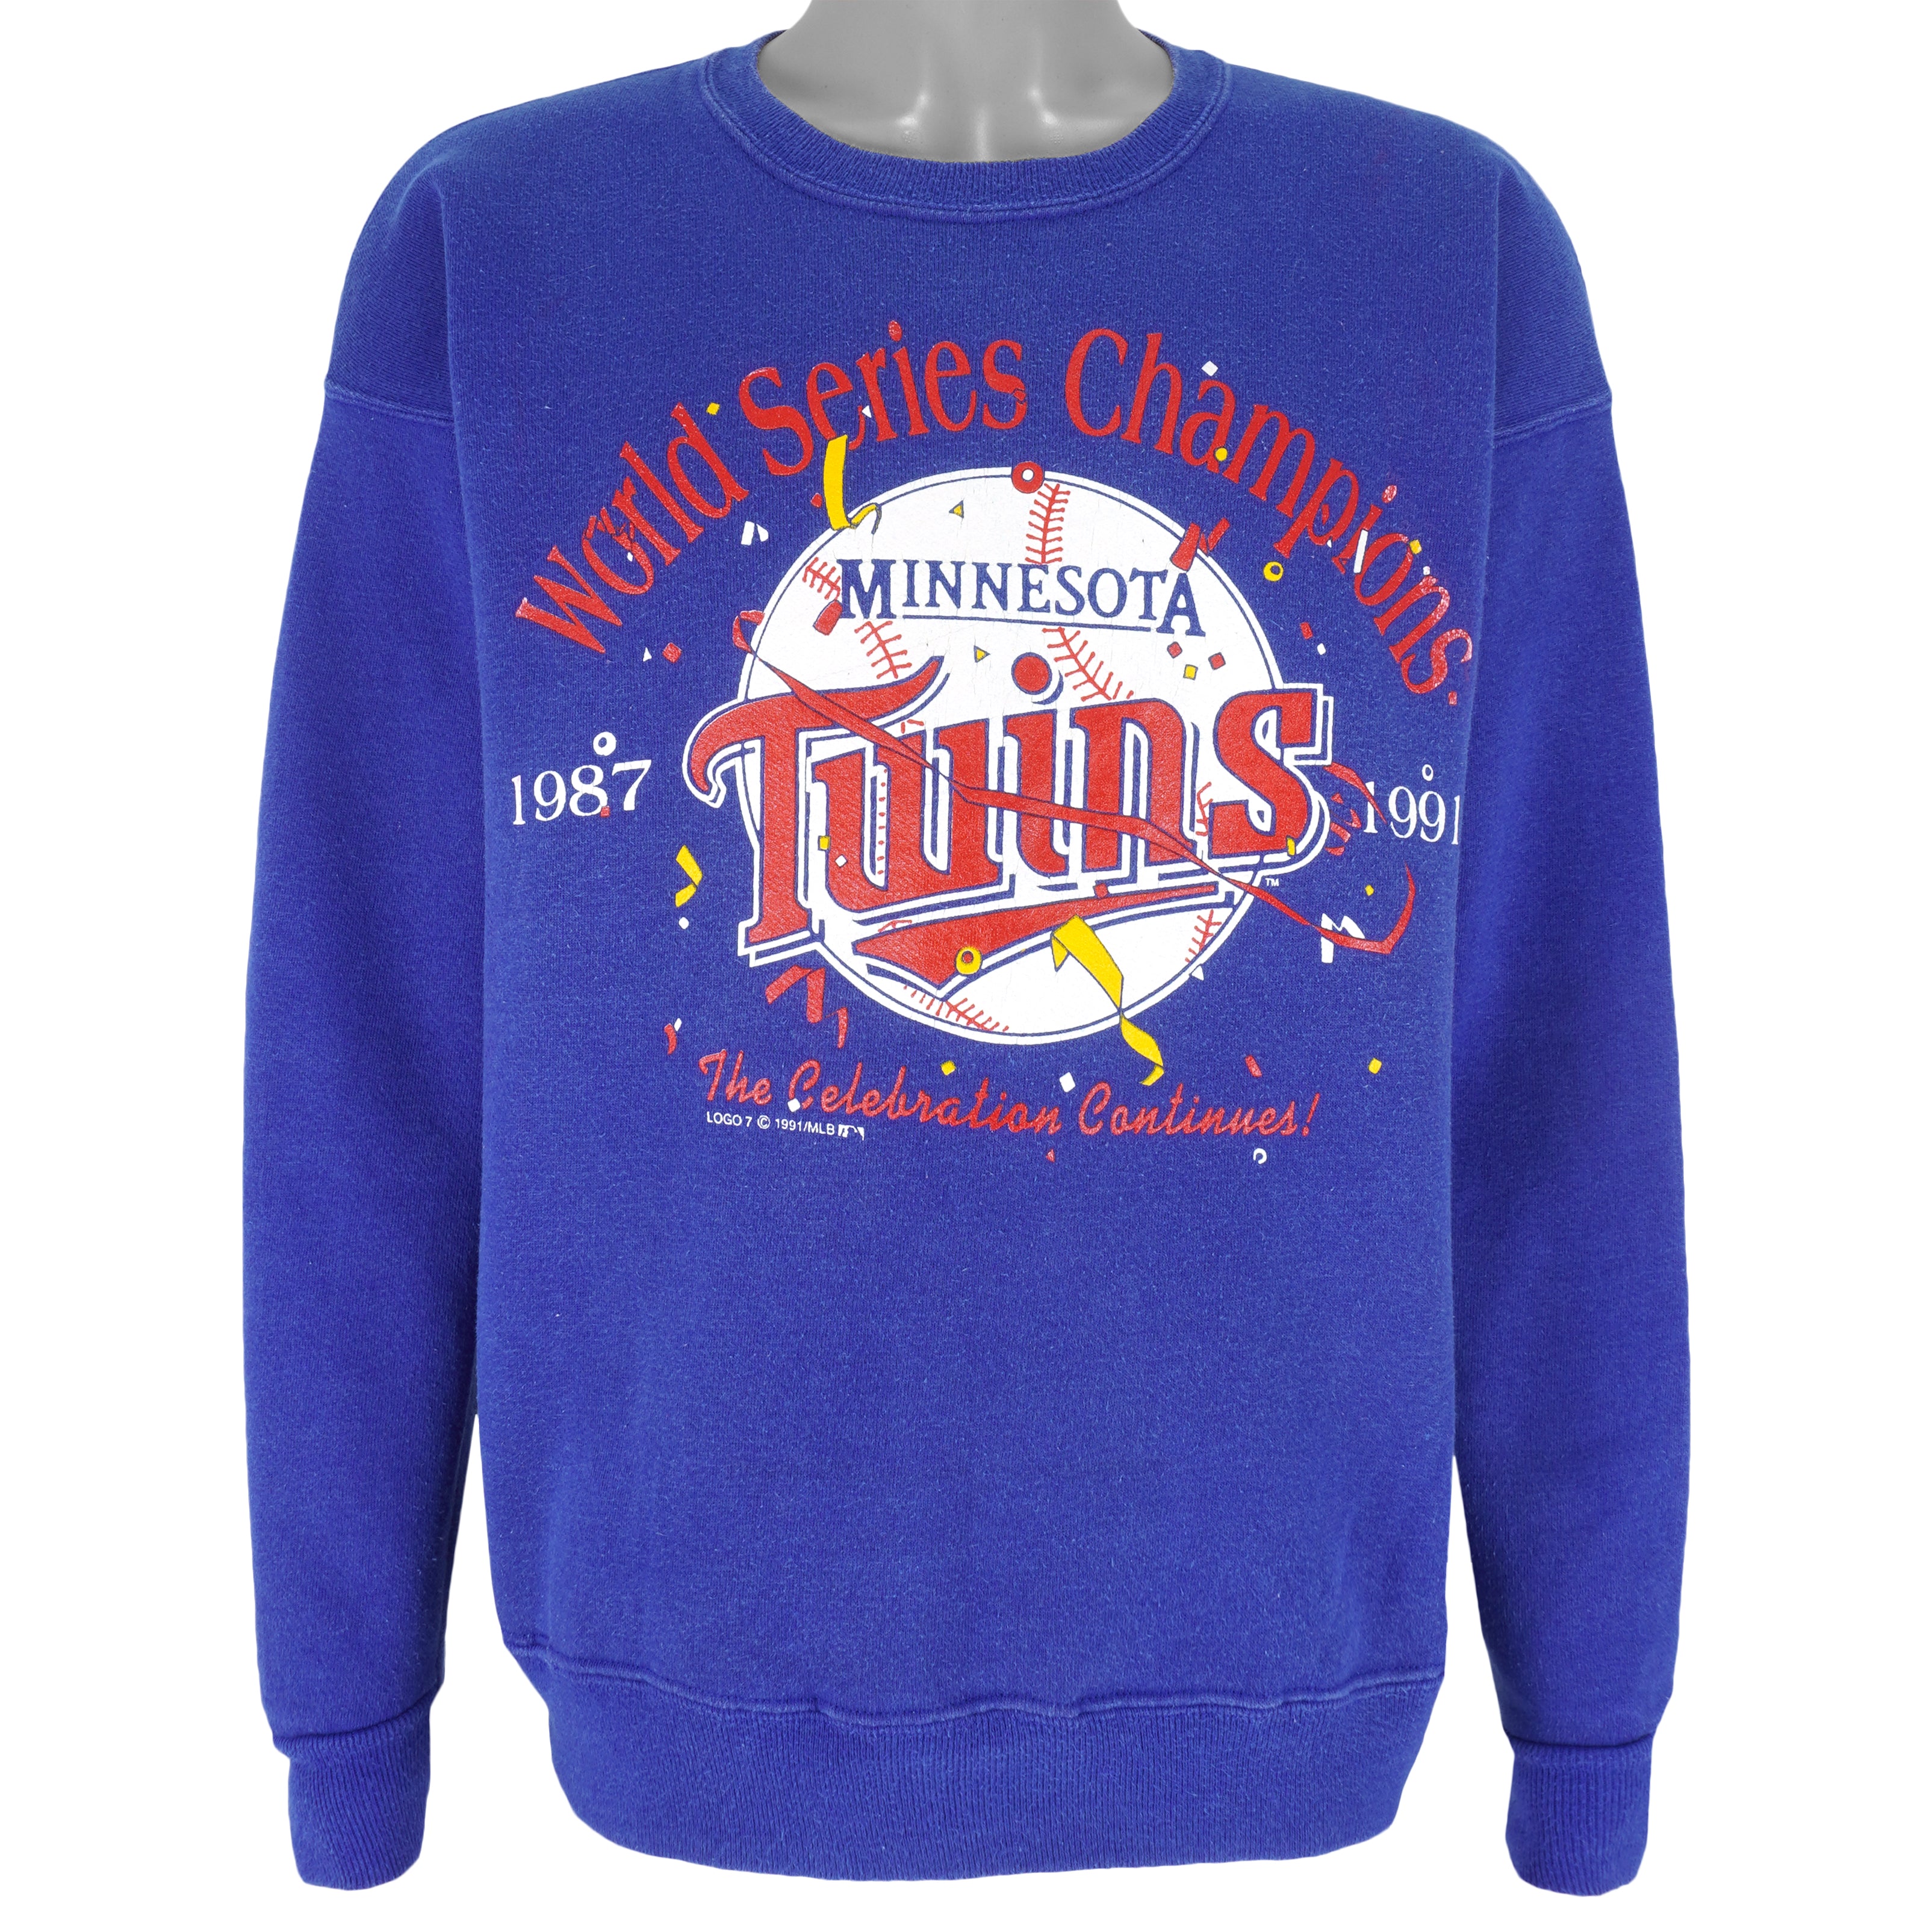 Minnesota Twins 1991 World Series Shirt 90s Vintage CARICATURE